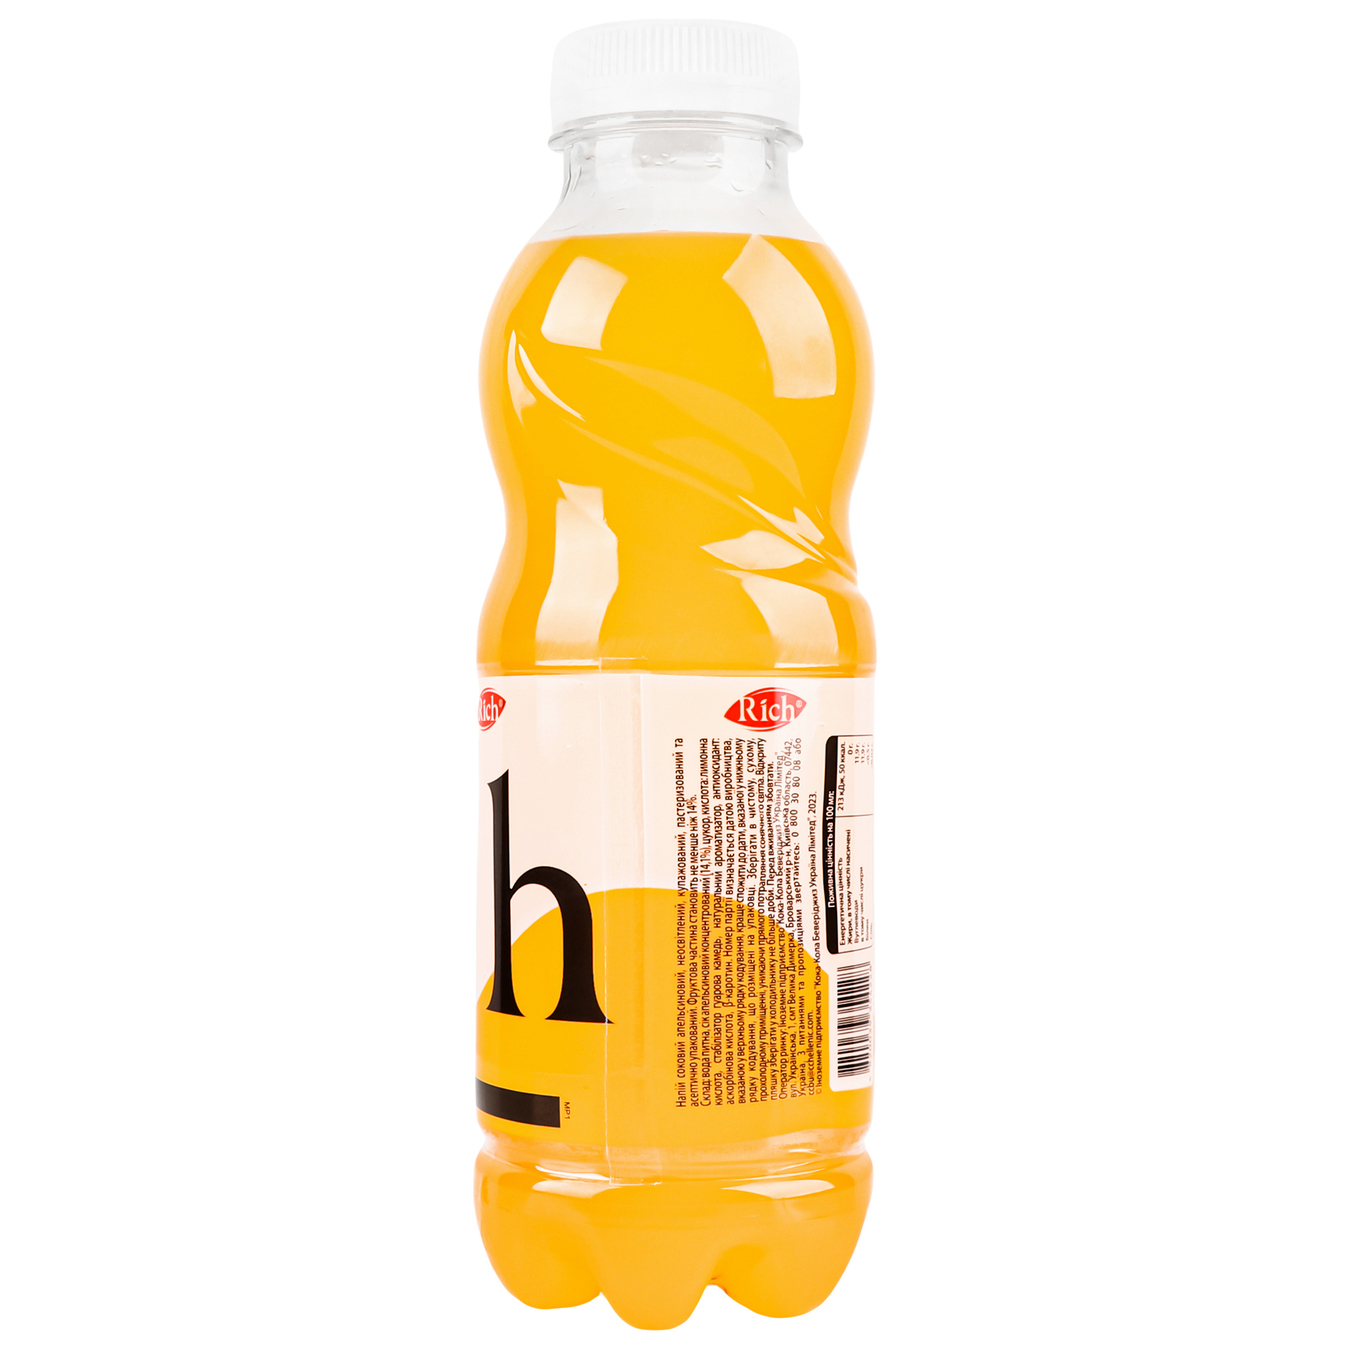 Juice drink Rich orange 0.5 l 2